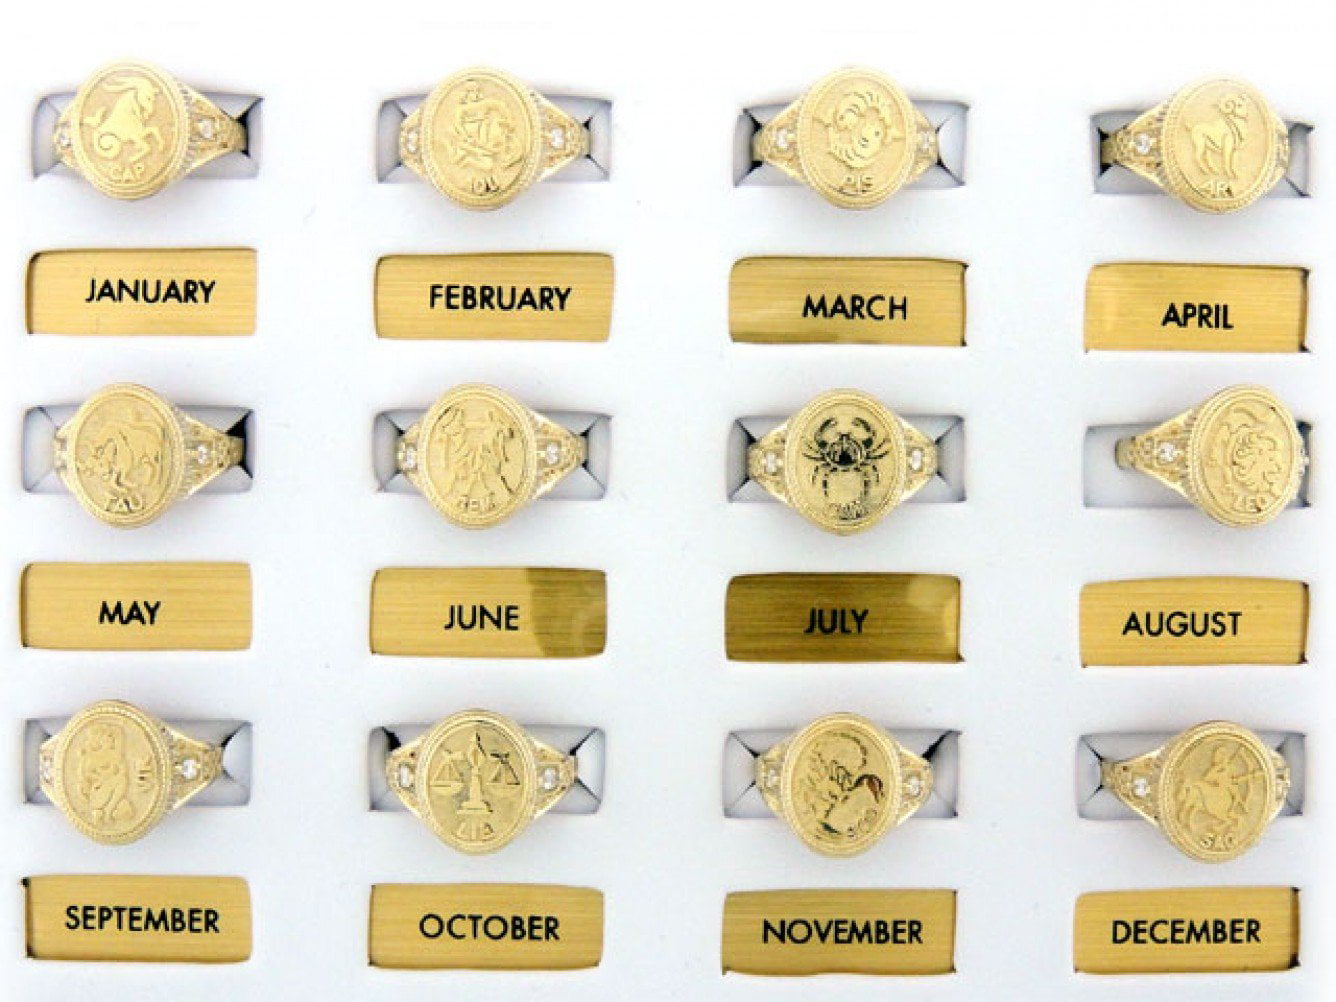 Gold Leo Zodiac Peridot Ring | eBay